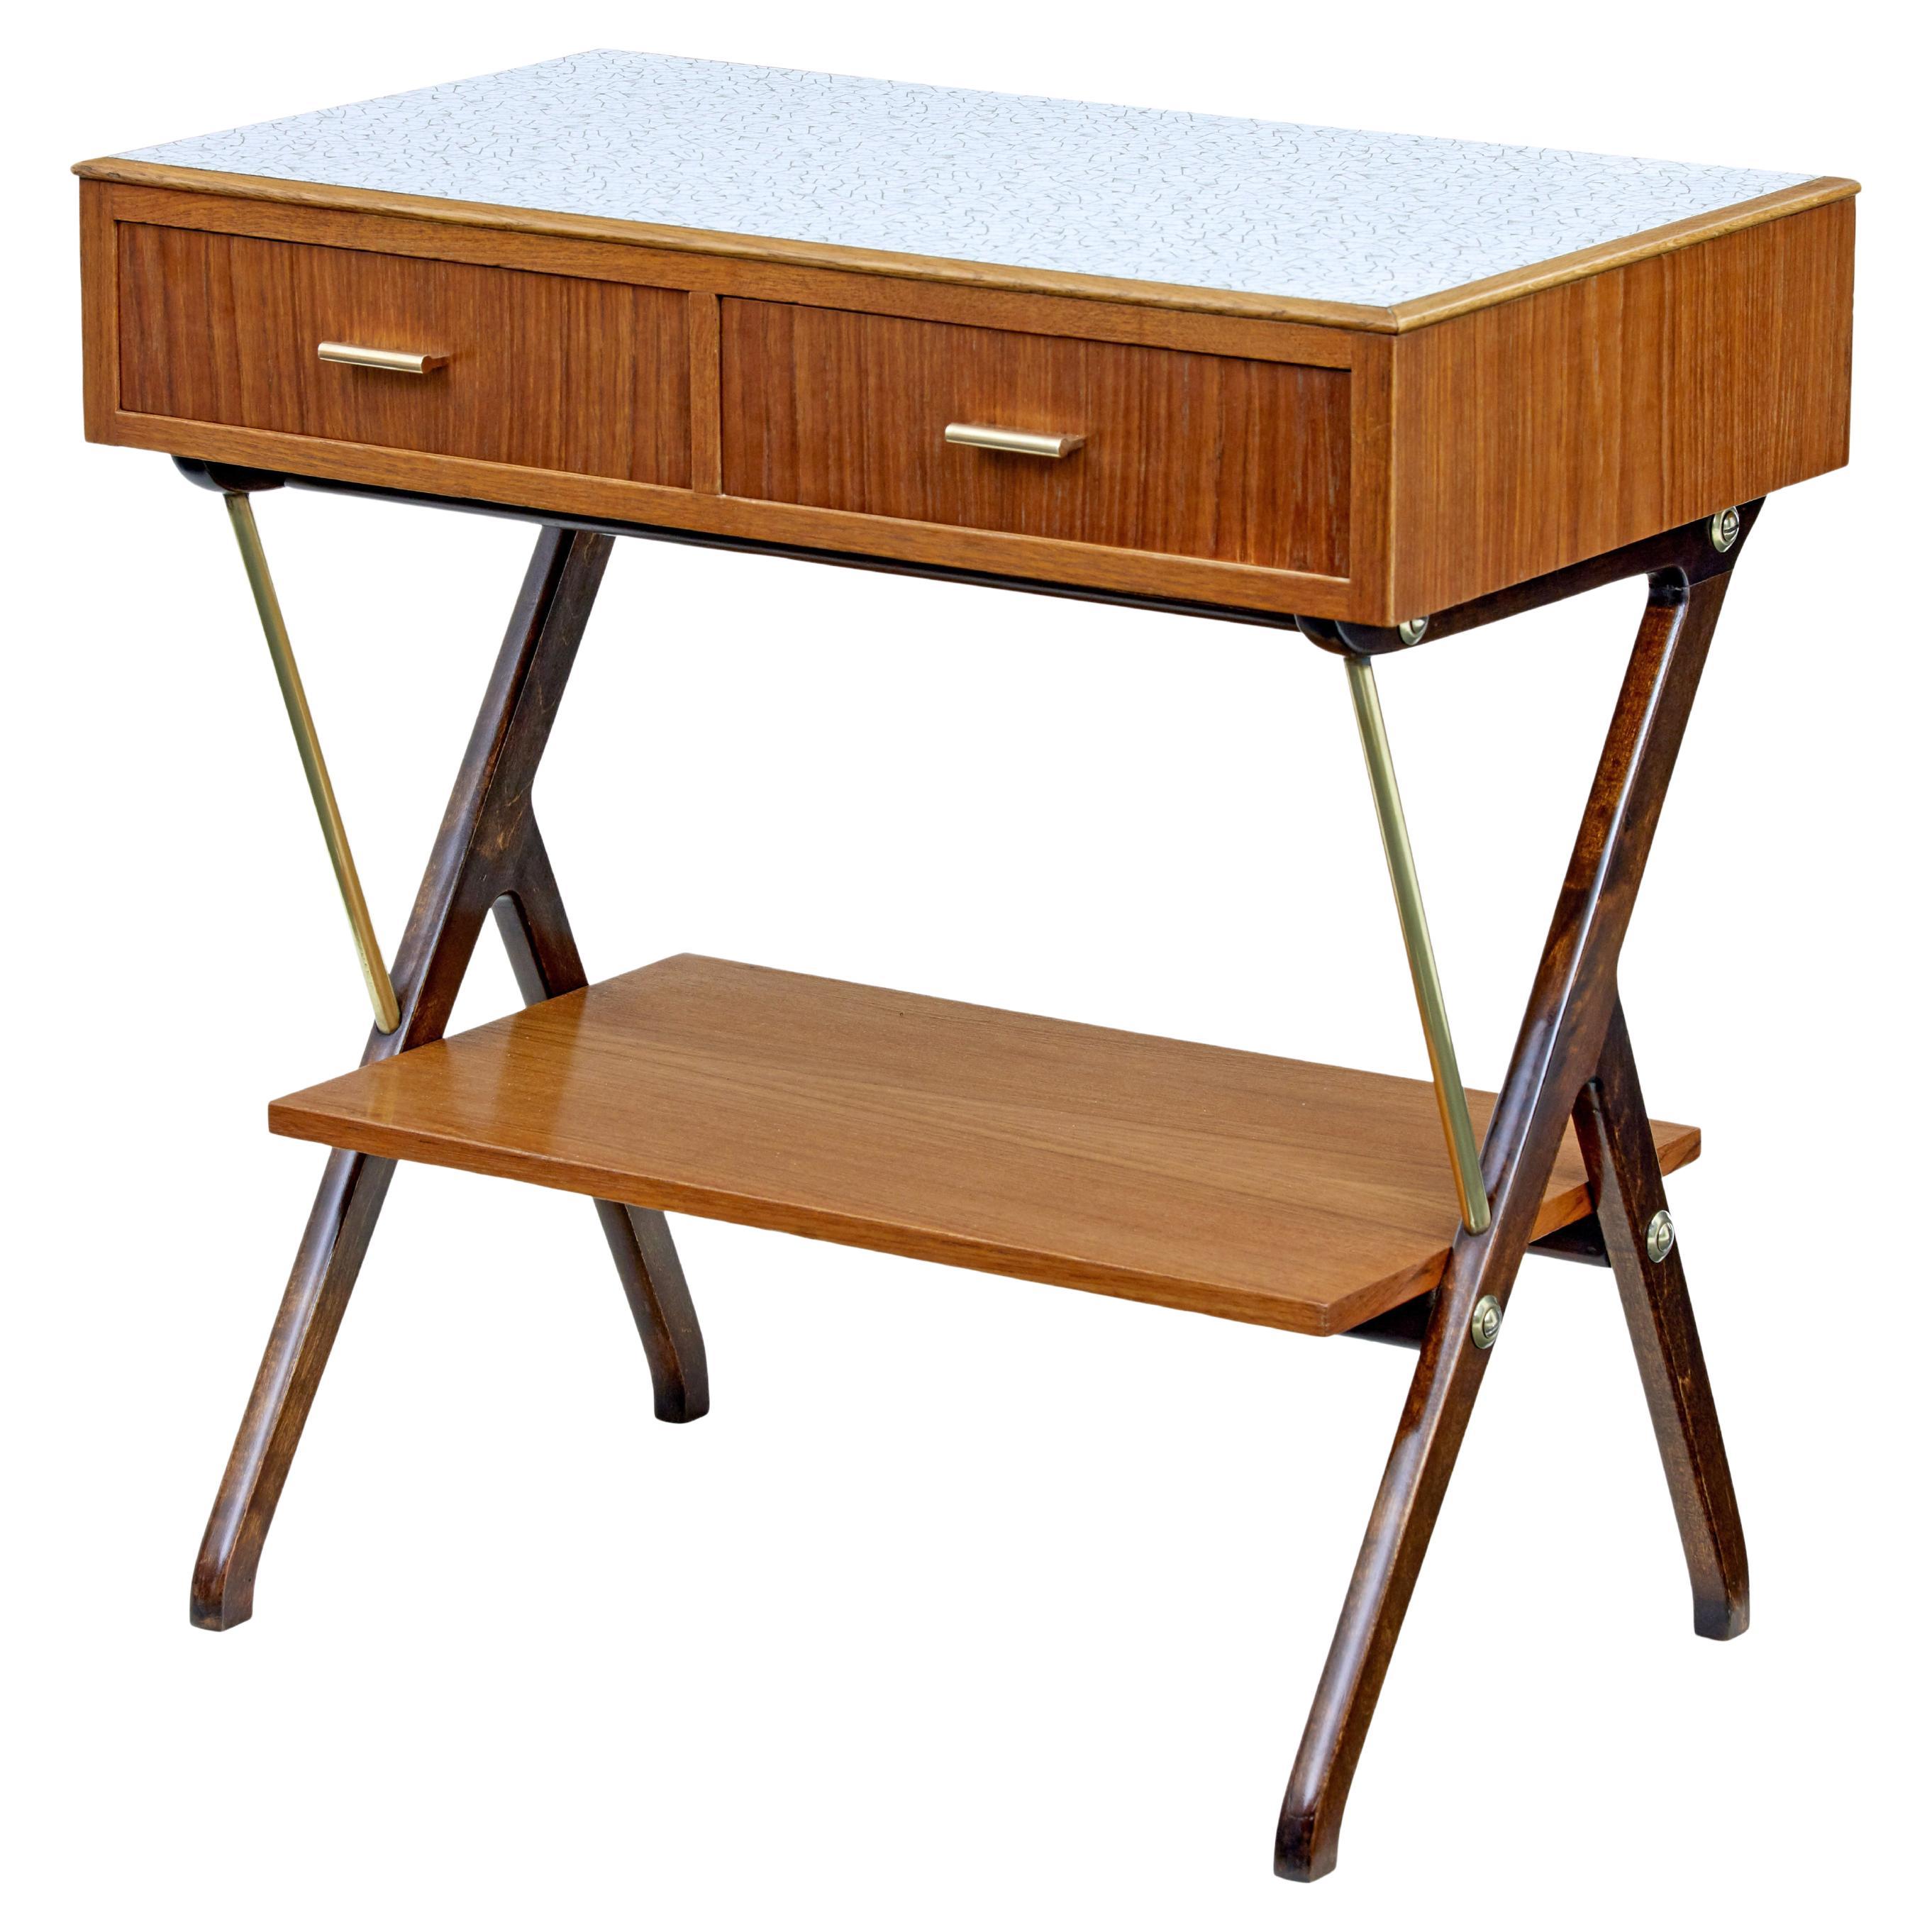 Mid 20th century Scandinavian modern teak side table